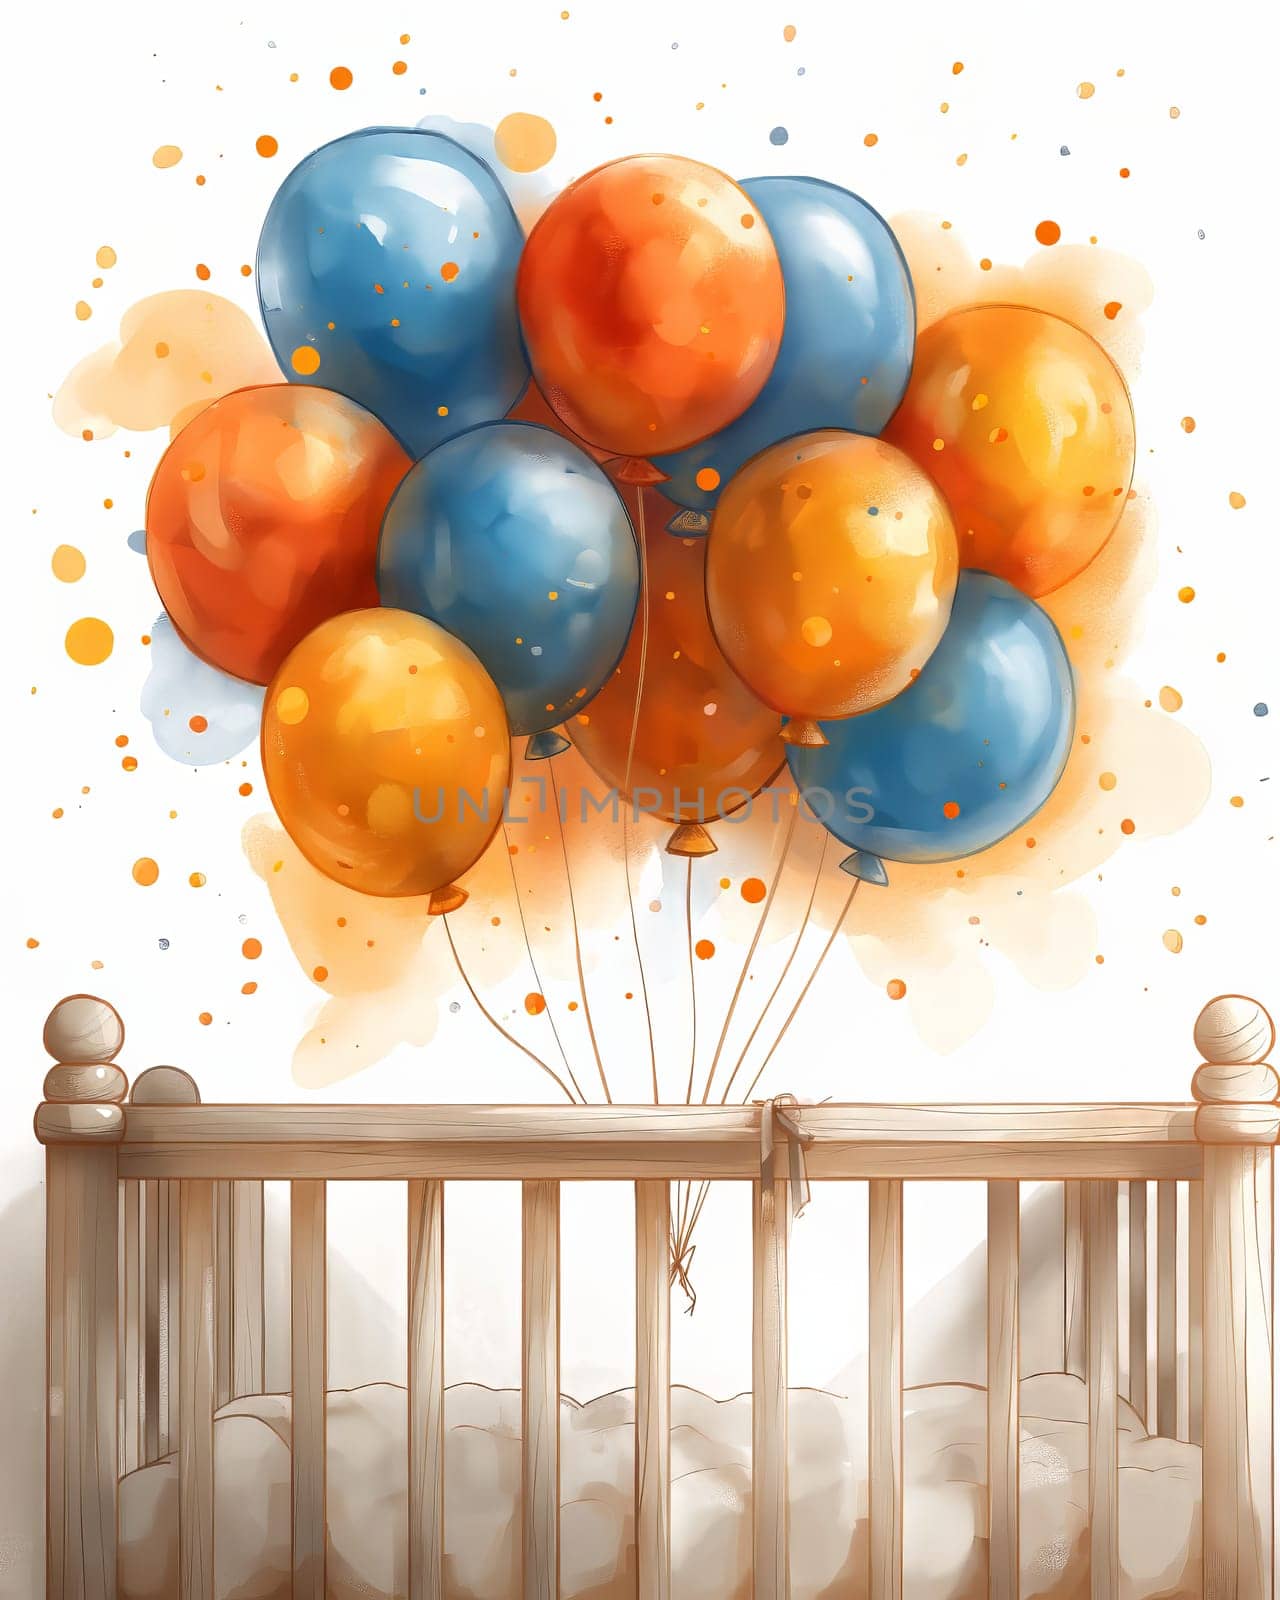 Greeting card, baby crib and congratulation balloons. Selective soft focus.